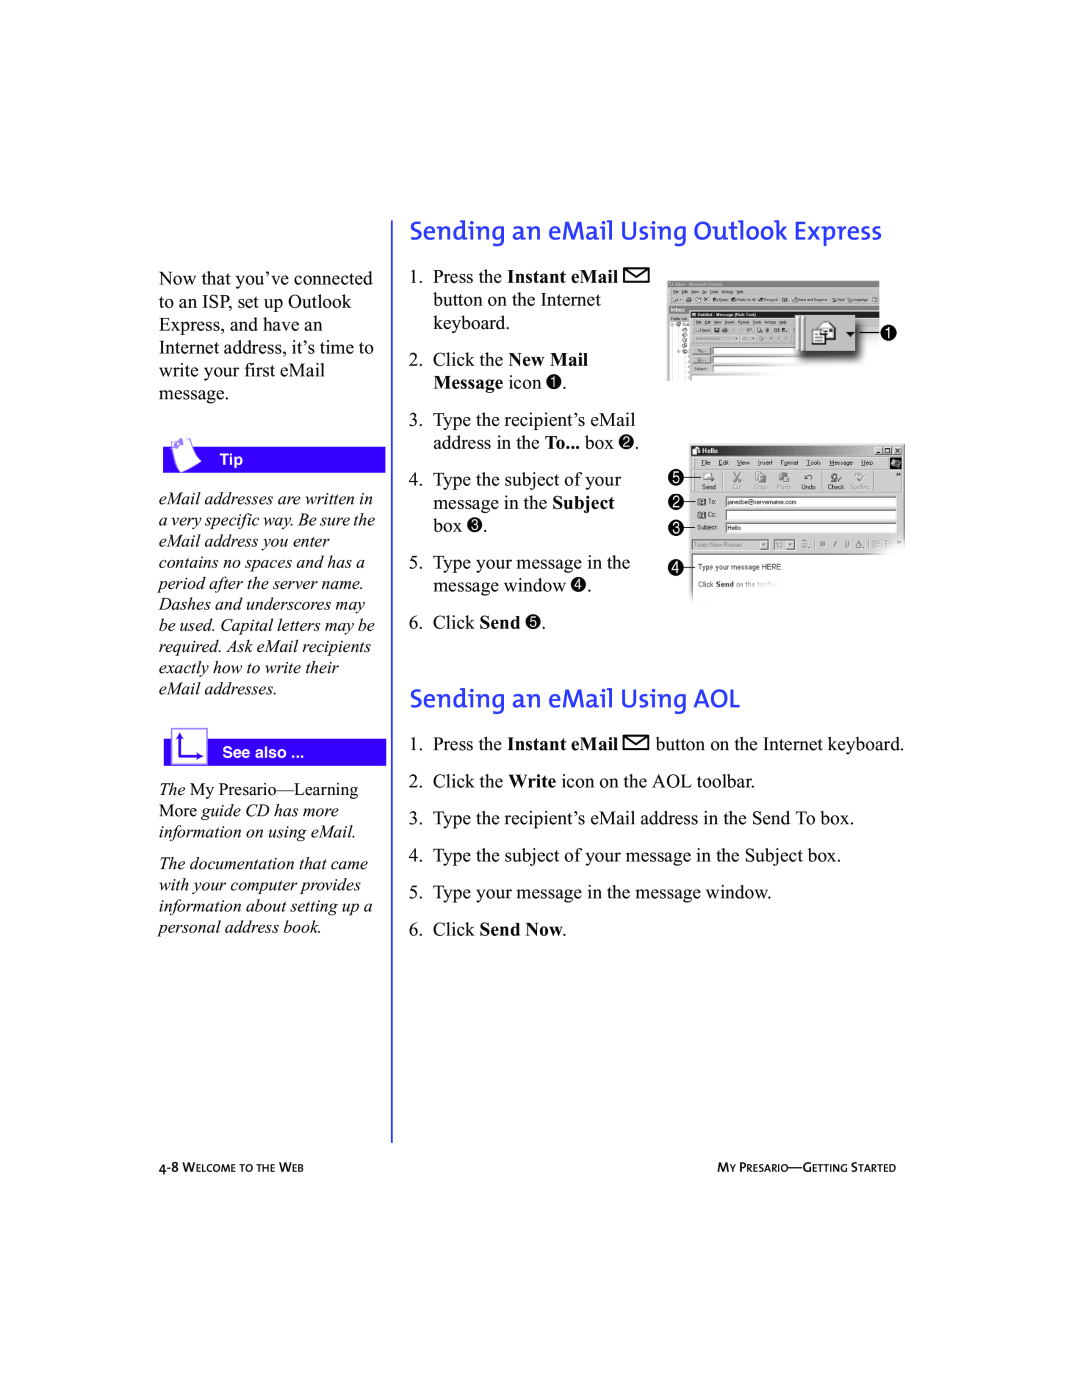 Compaq 5BW474 manual Sending an eMail Using Outlook Express, Sending an eMail Using AOL, Welcome To The Web 